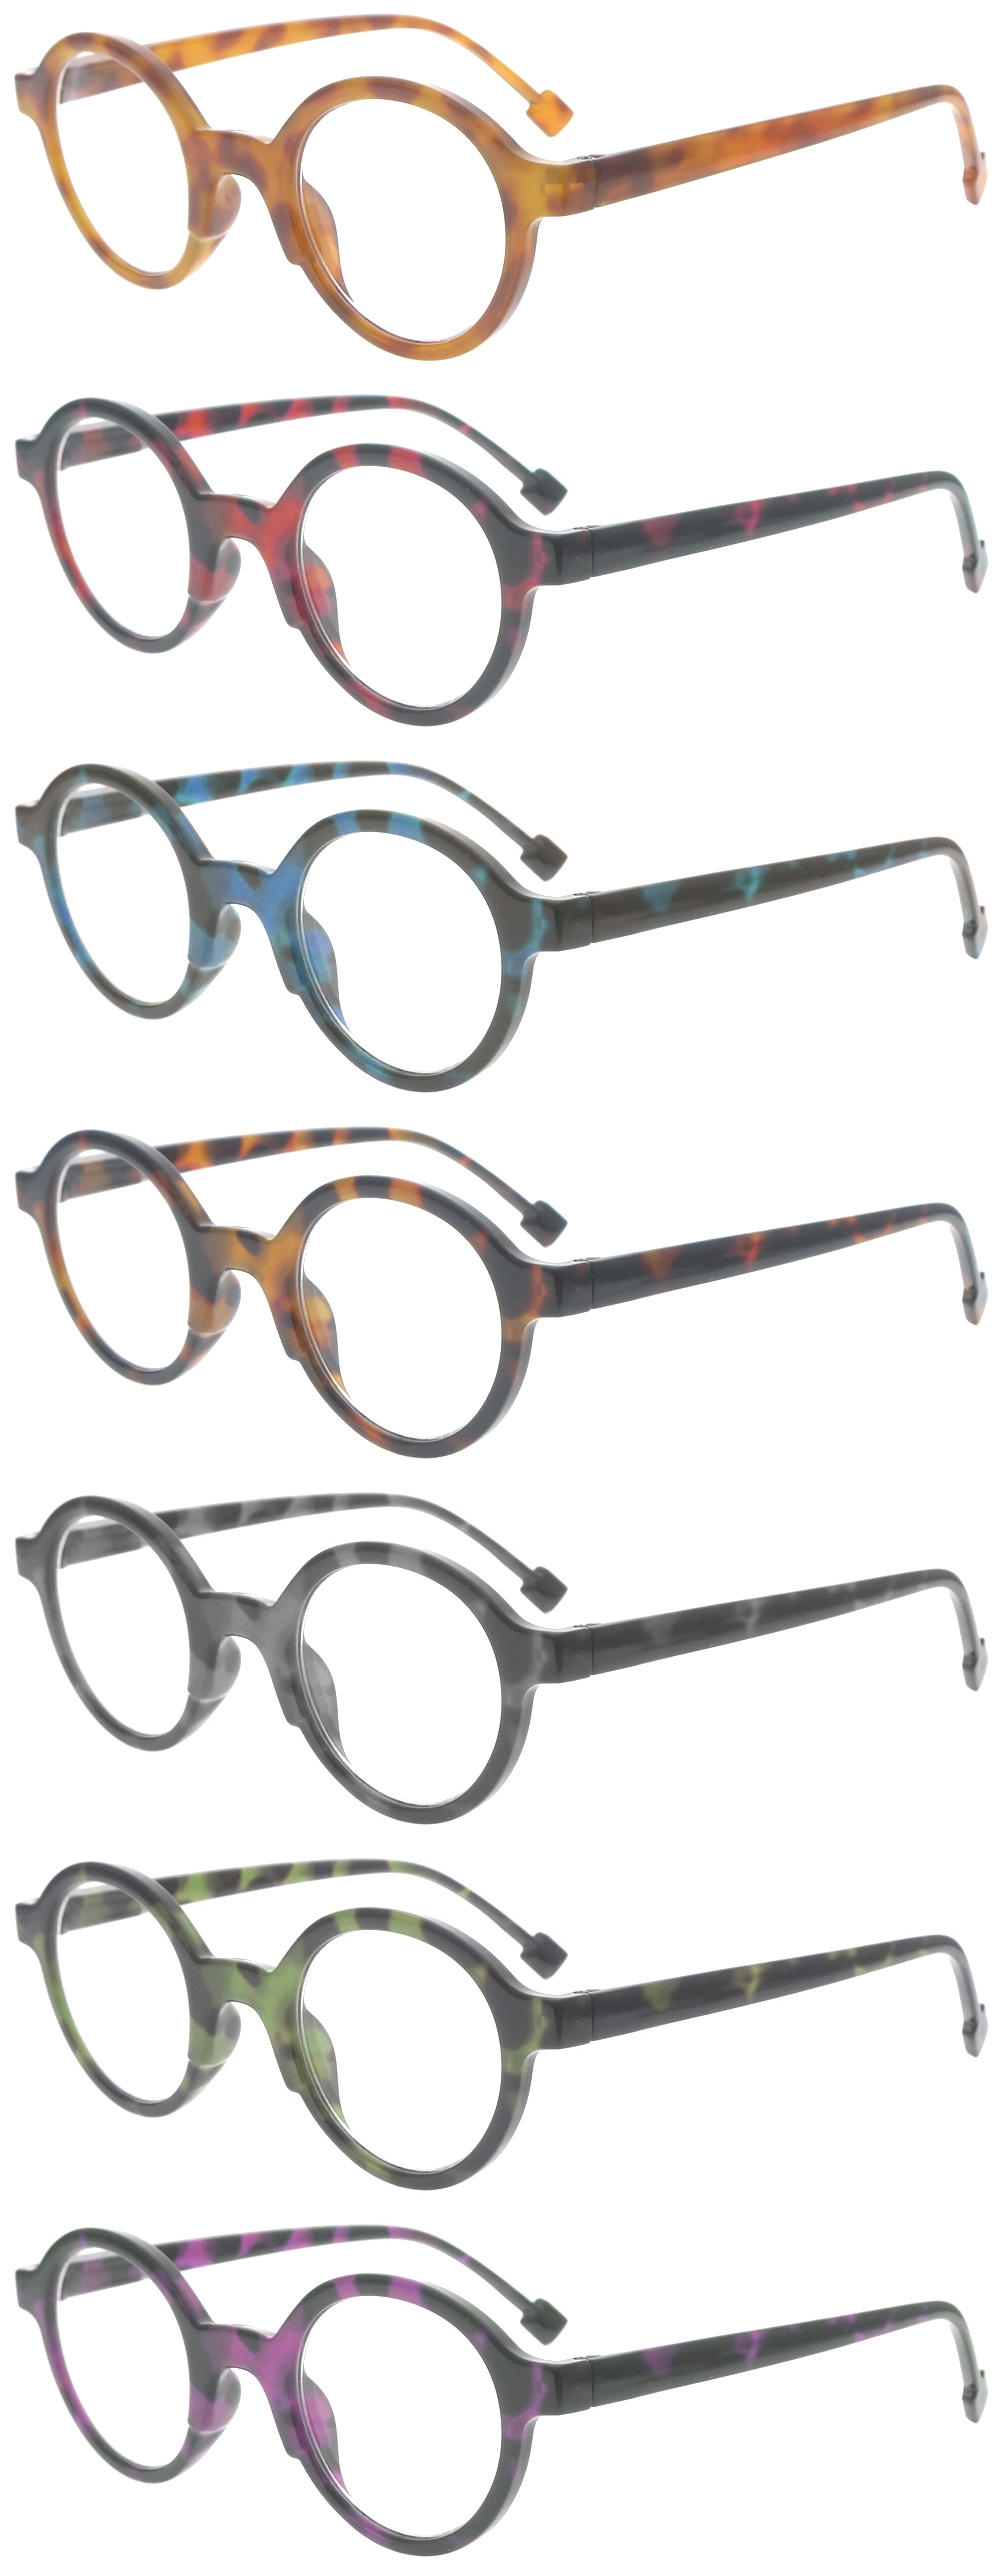 Dachuan Optical DRP131129 China Wholesale Unisex Fashionable Plastic Reading Glasses with Round Shape (2)